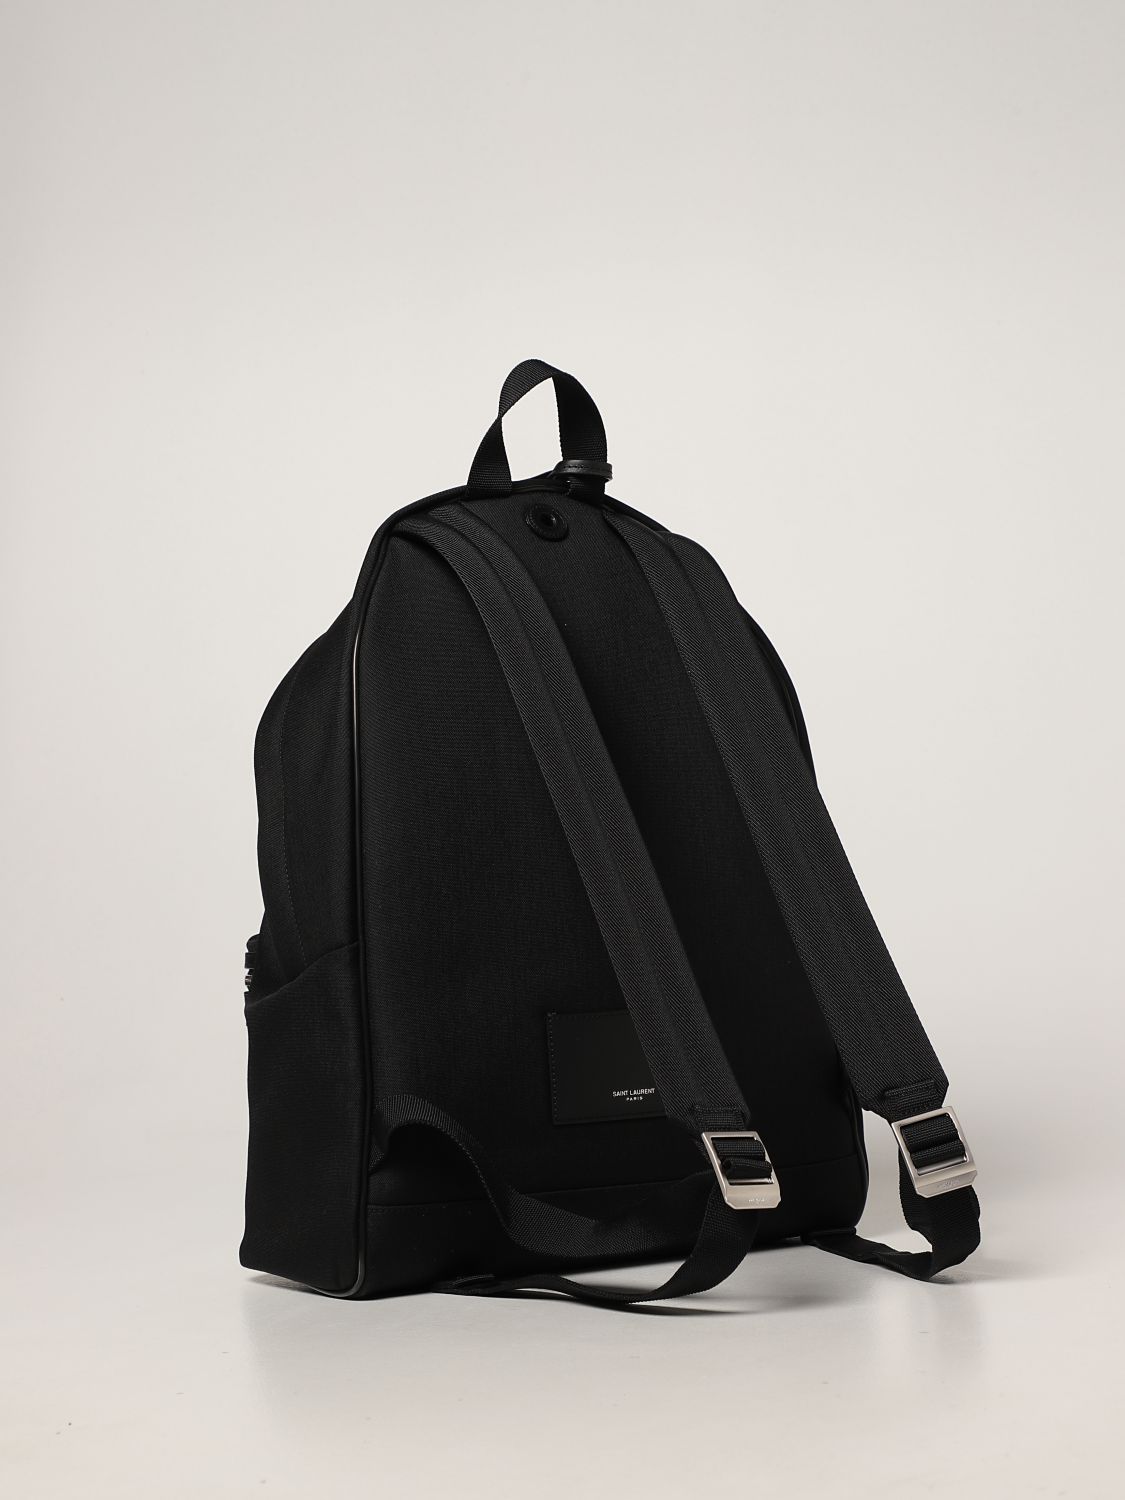 Saint Laurent City Backpack - Black